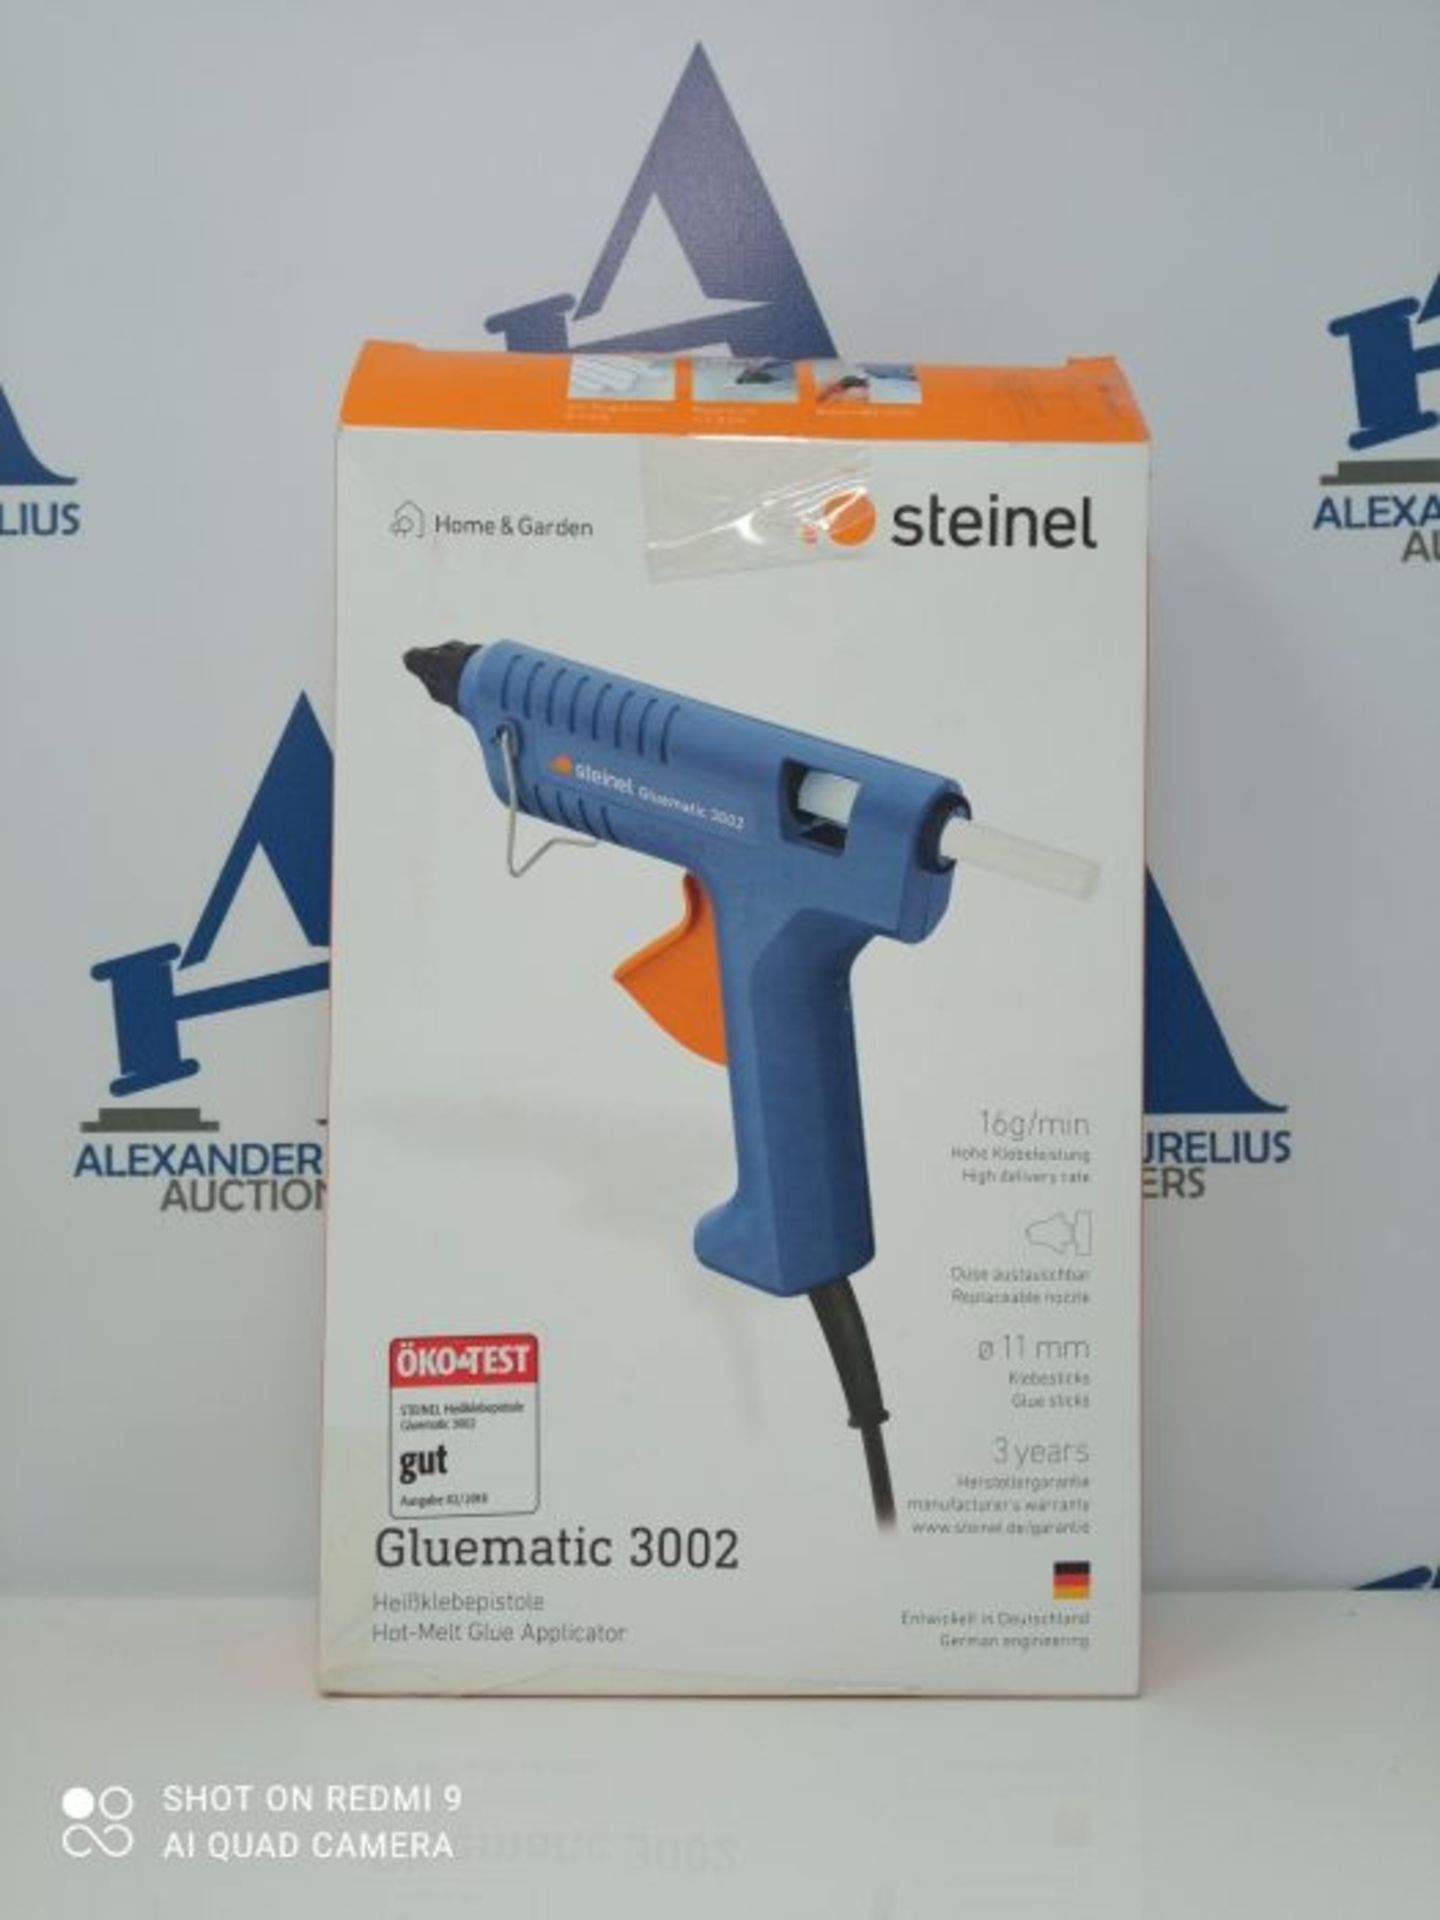 Steinel Gluematic 3002 - glue gun, PTC heating technology, delivery rate 16 g/min, inc